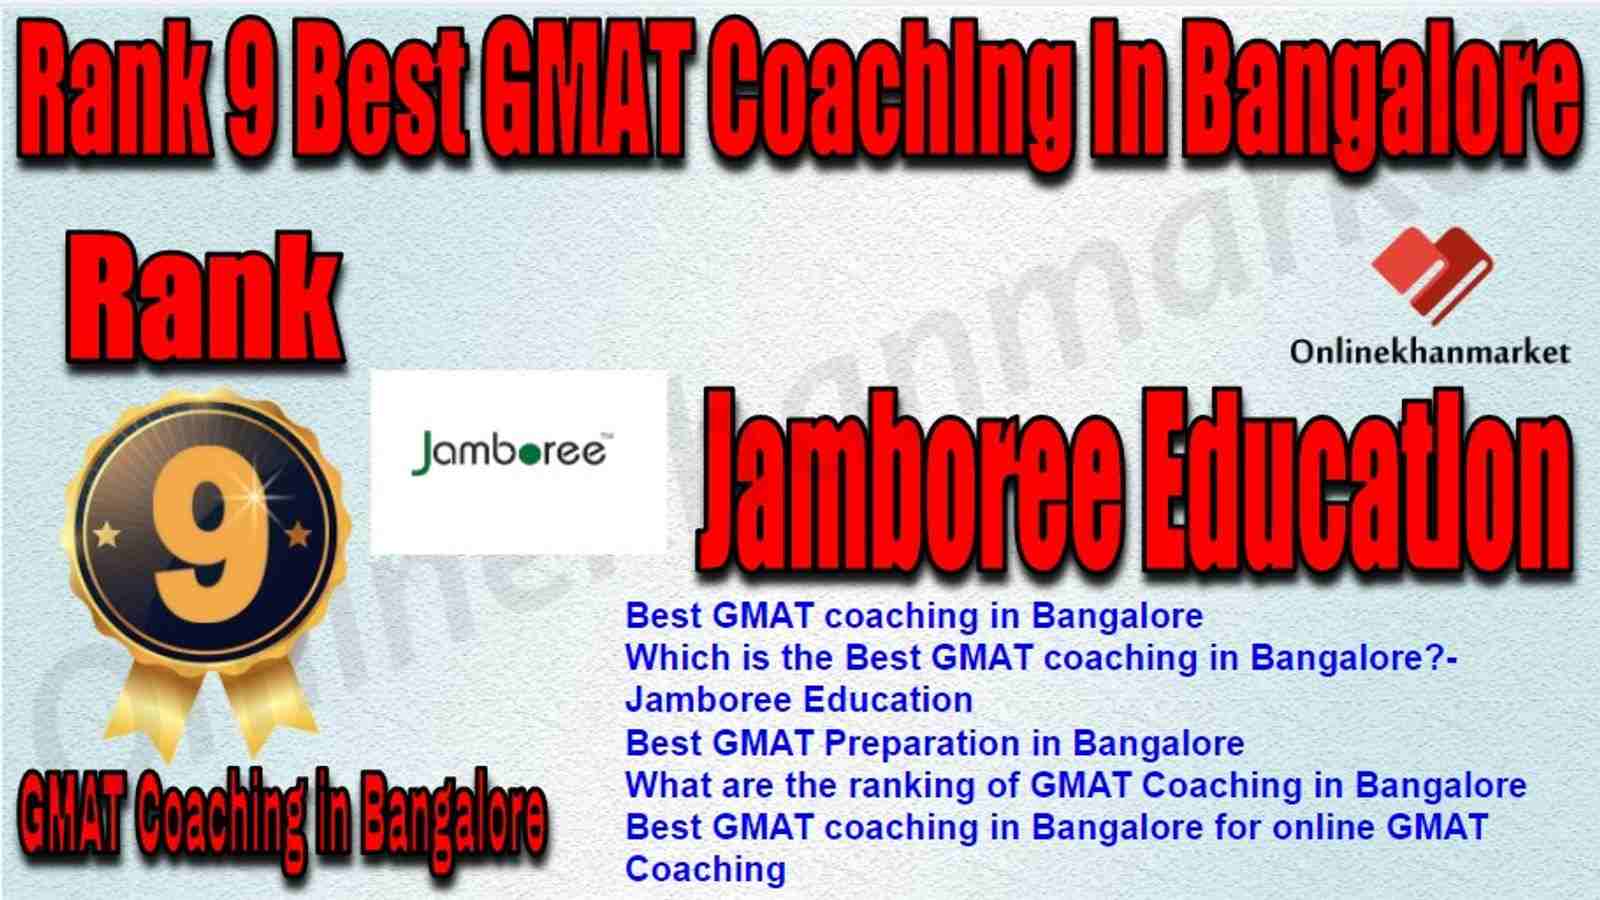 Rank 9 Best GMAT Coaching in Bangalore